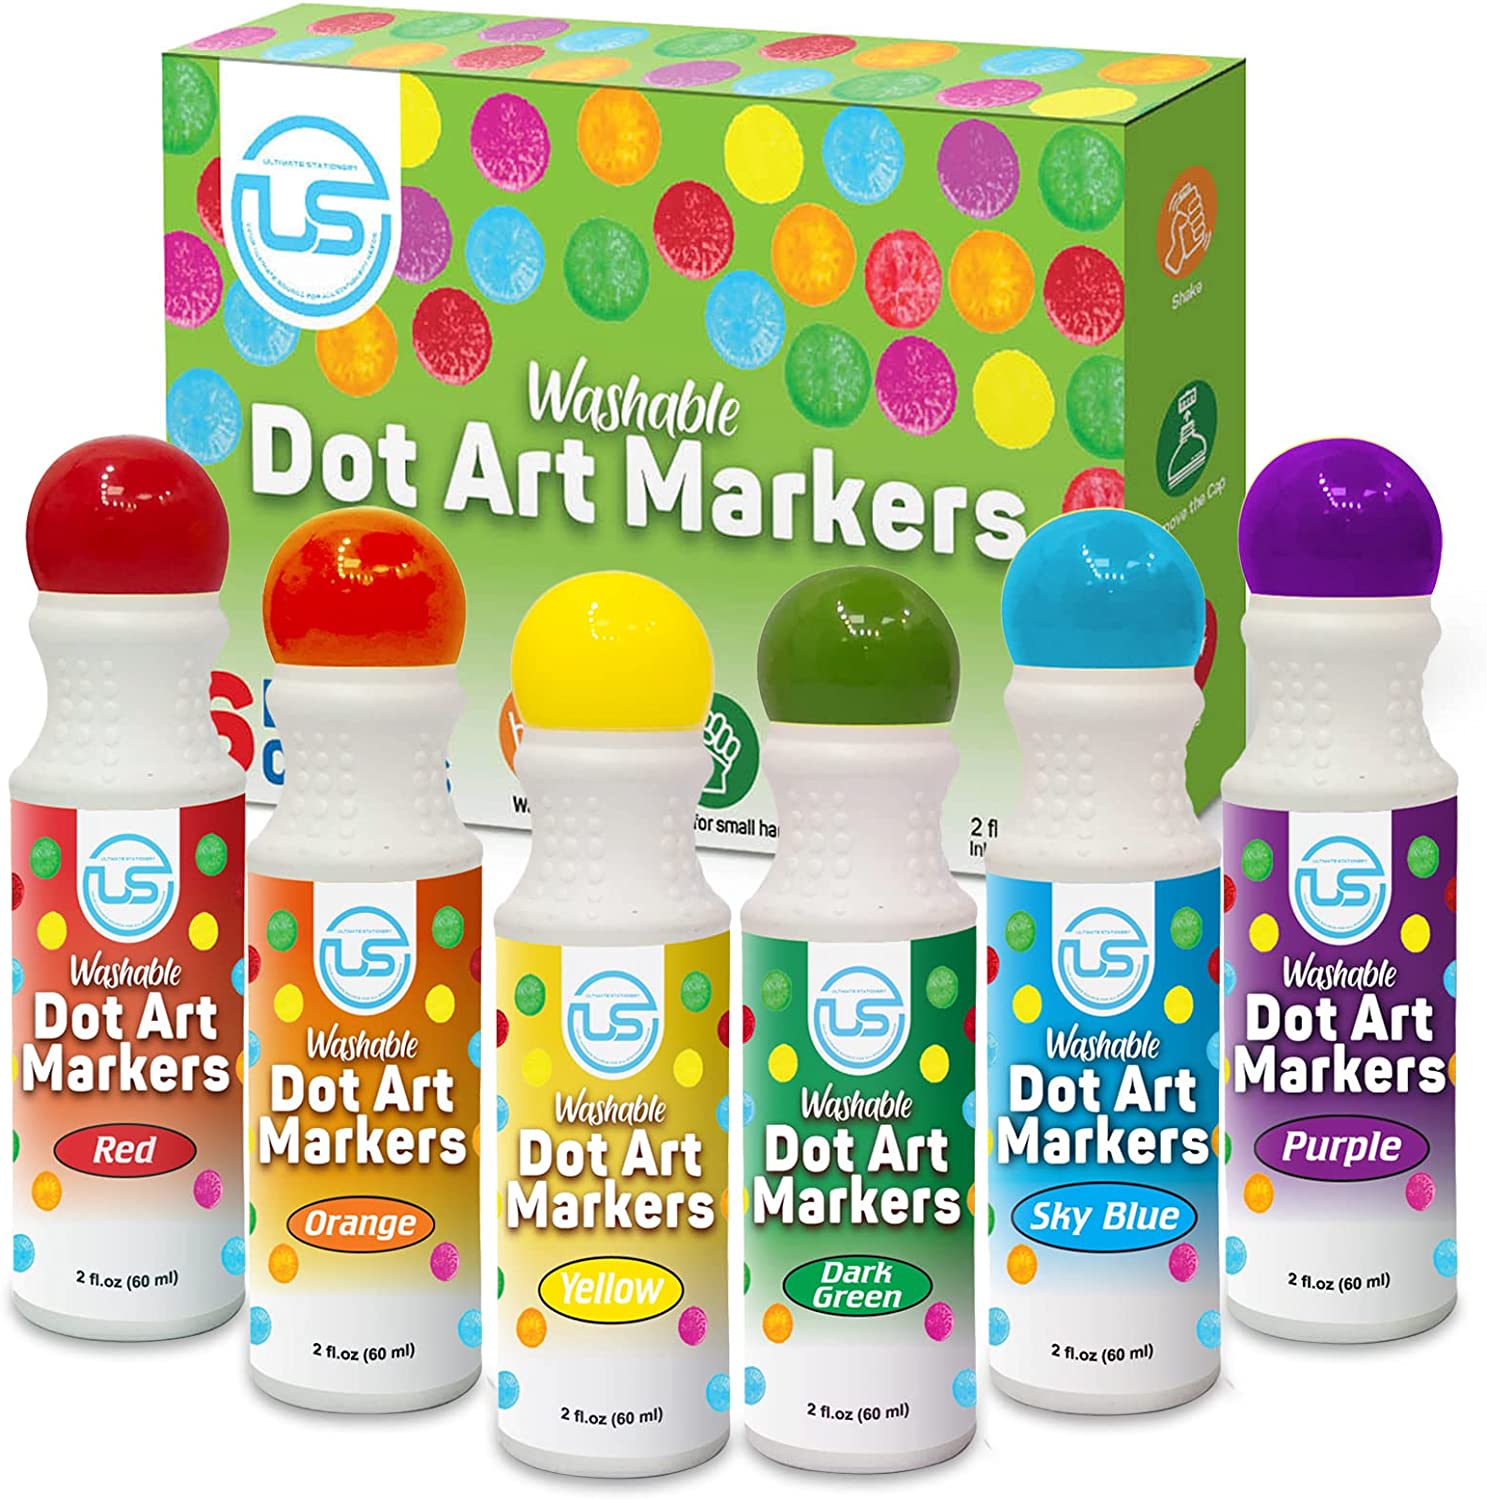  Yuanhe Bingo Daubers Dot Markers Mixed Colors Set of 6